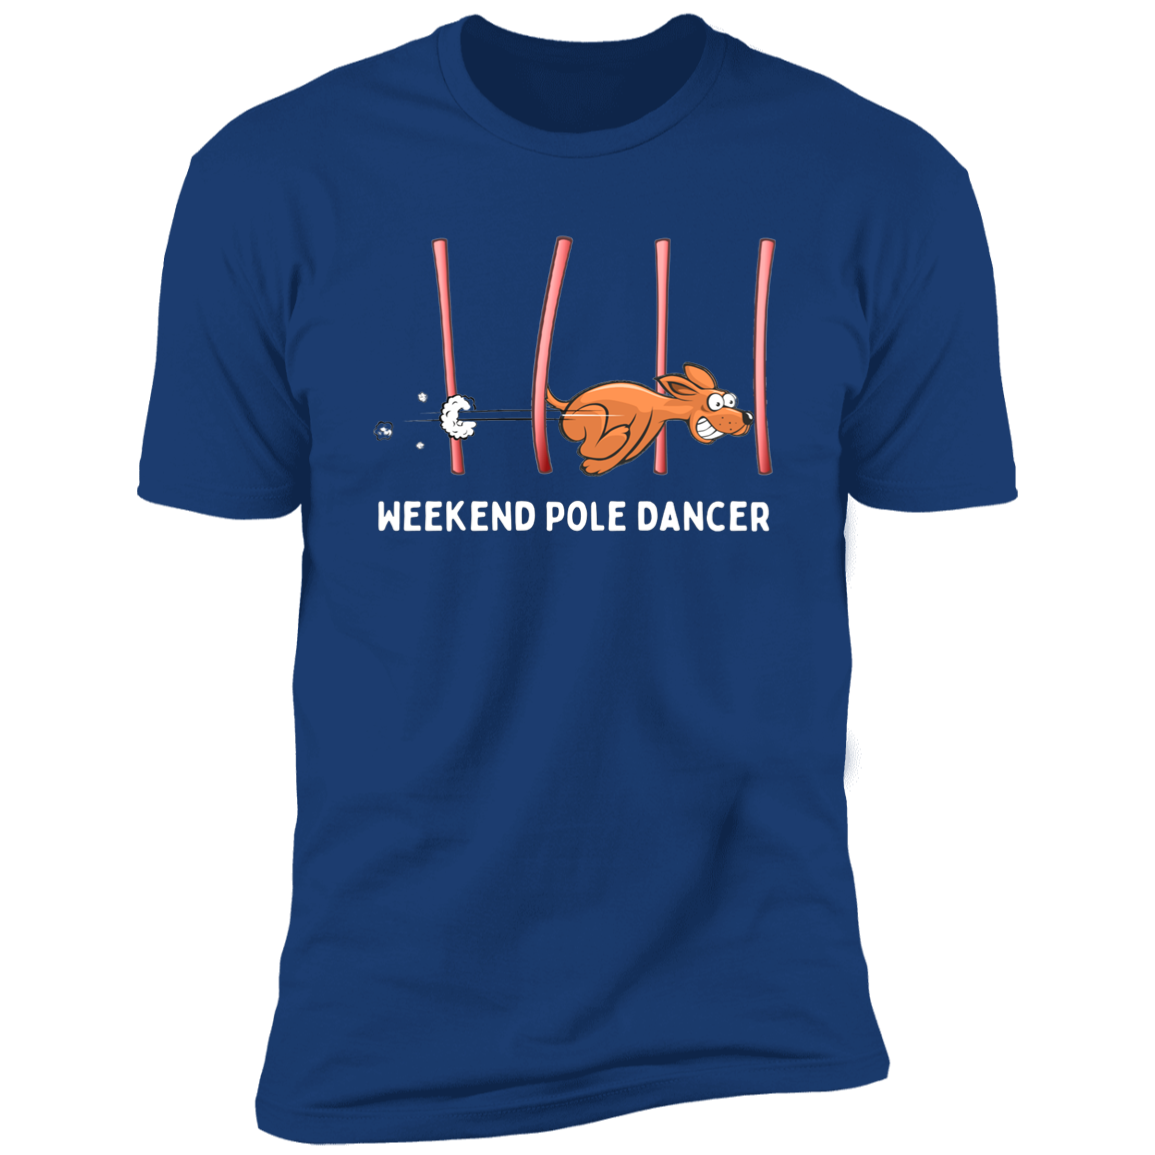 Weekend Pole Dancer Dog Agility T-Shirt, dog shirt for humans, sporting dog shirt, agility dog shirt, in royal blue